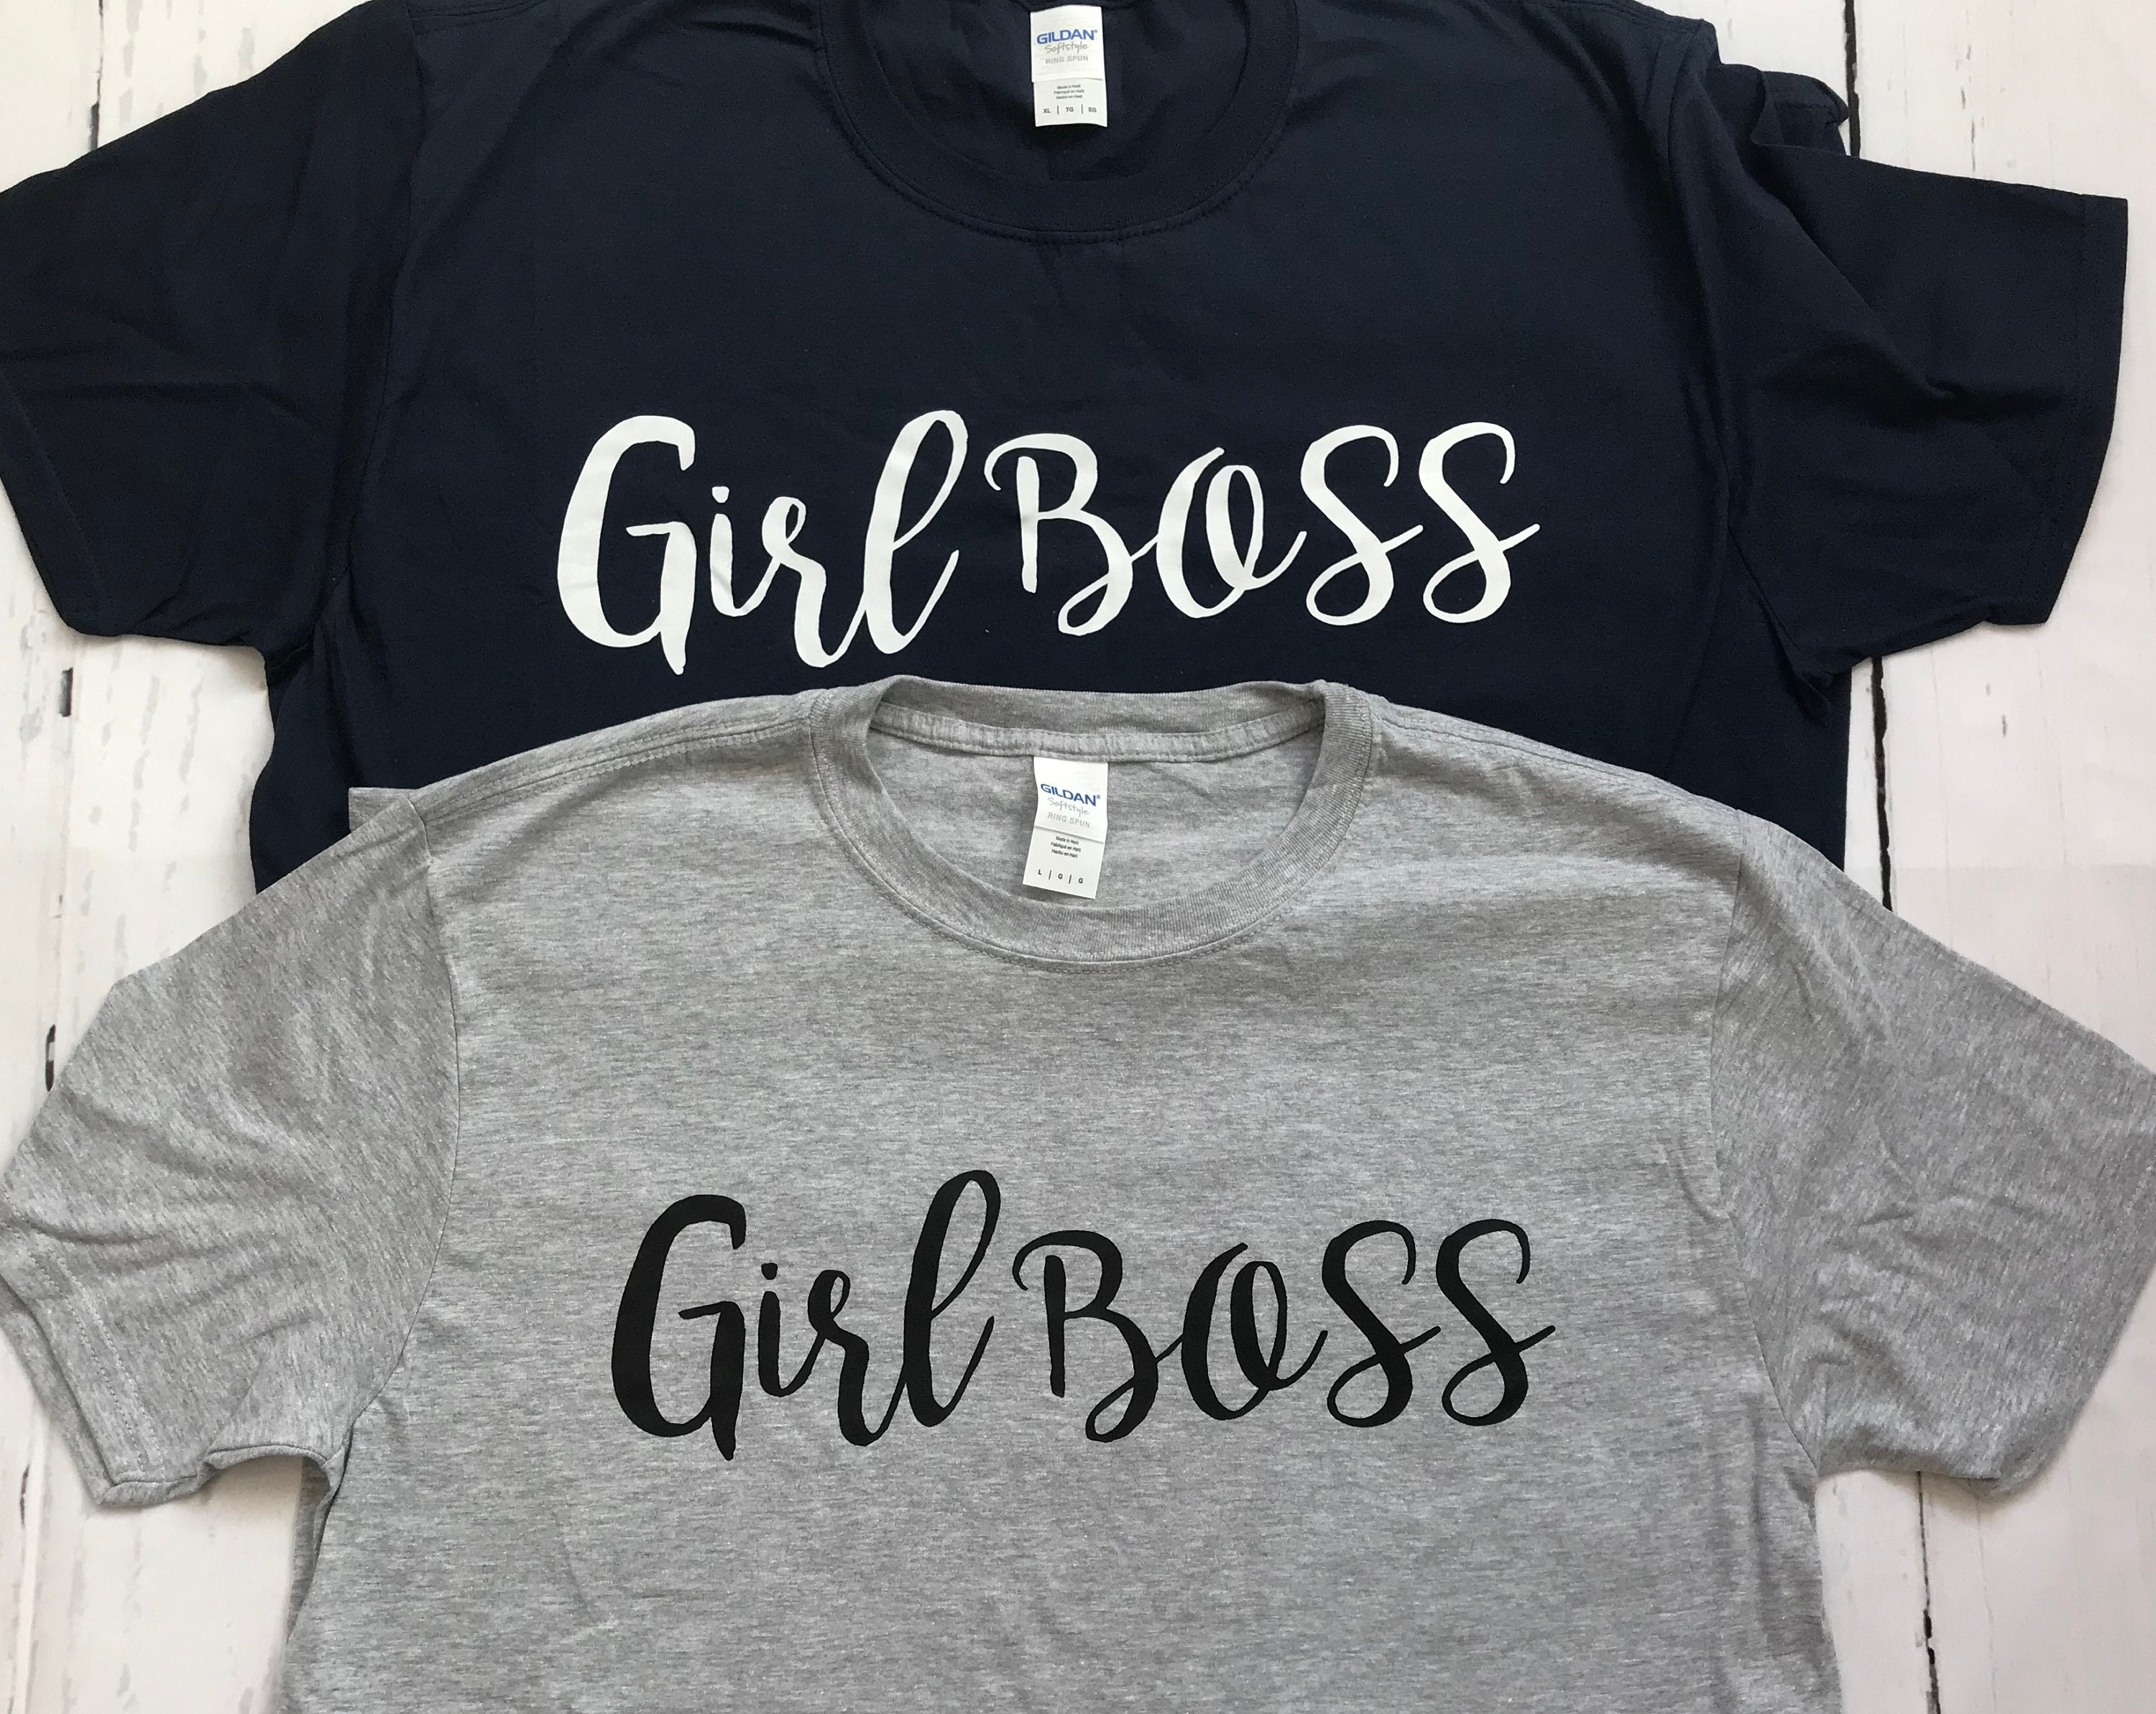 girlboss tshirt